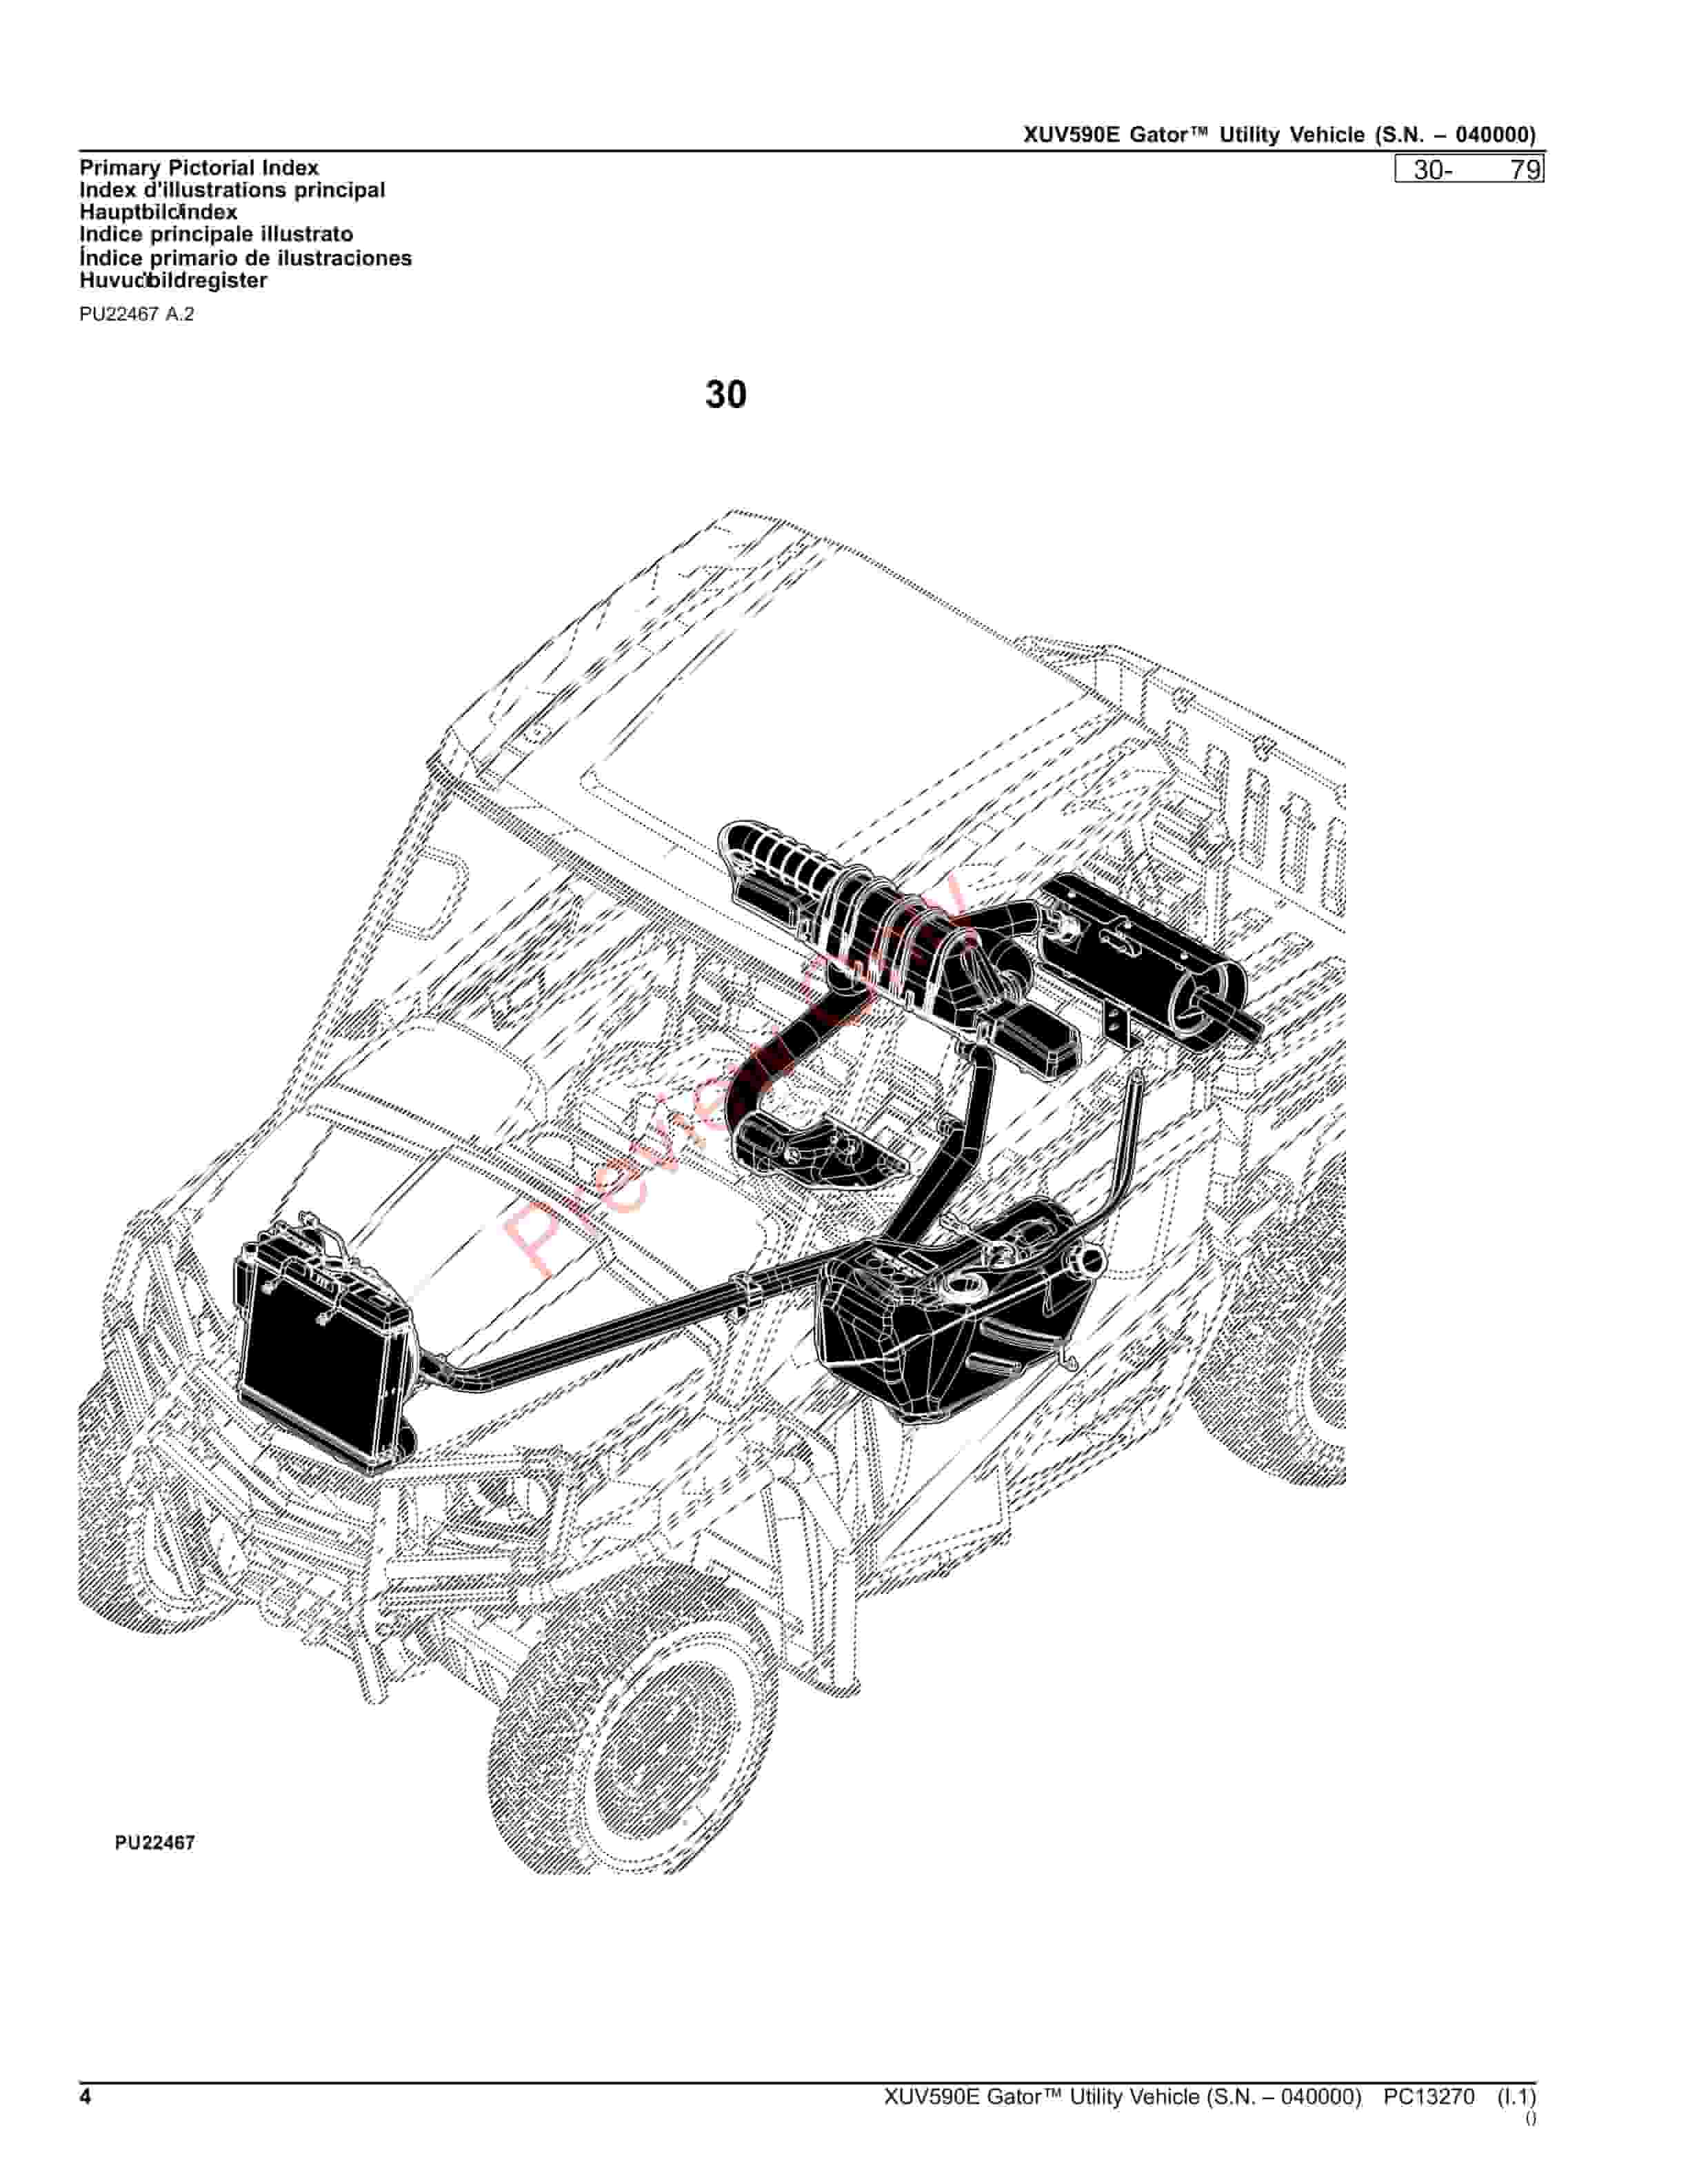 John Deere XUV590E Gator Utility Vehicle (S.N. 040000) Parts Catalog PC13270 10SEP23-4